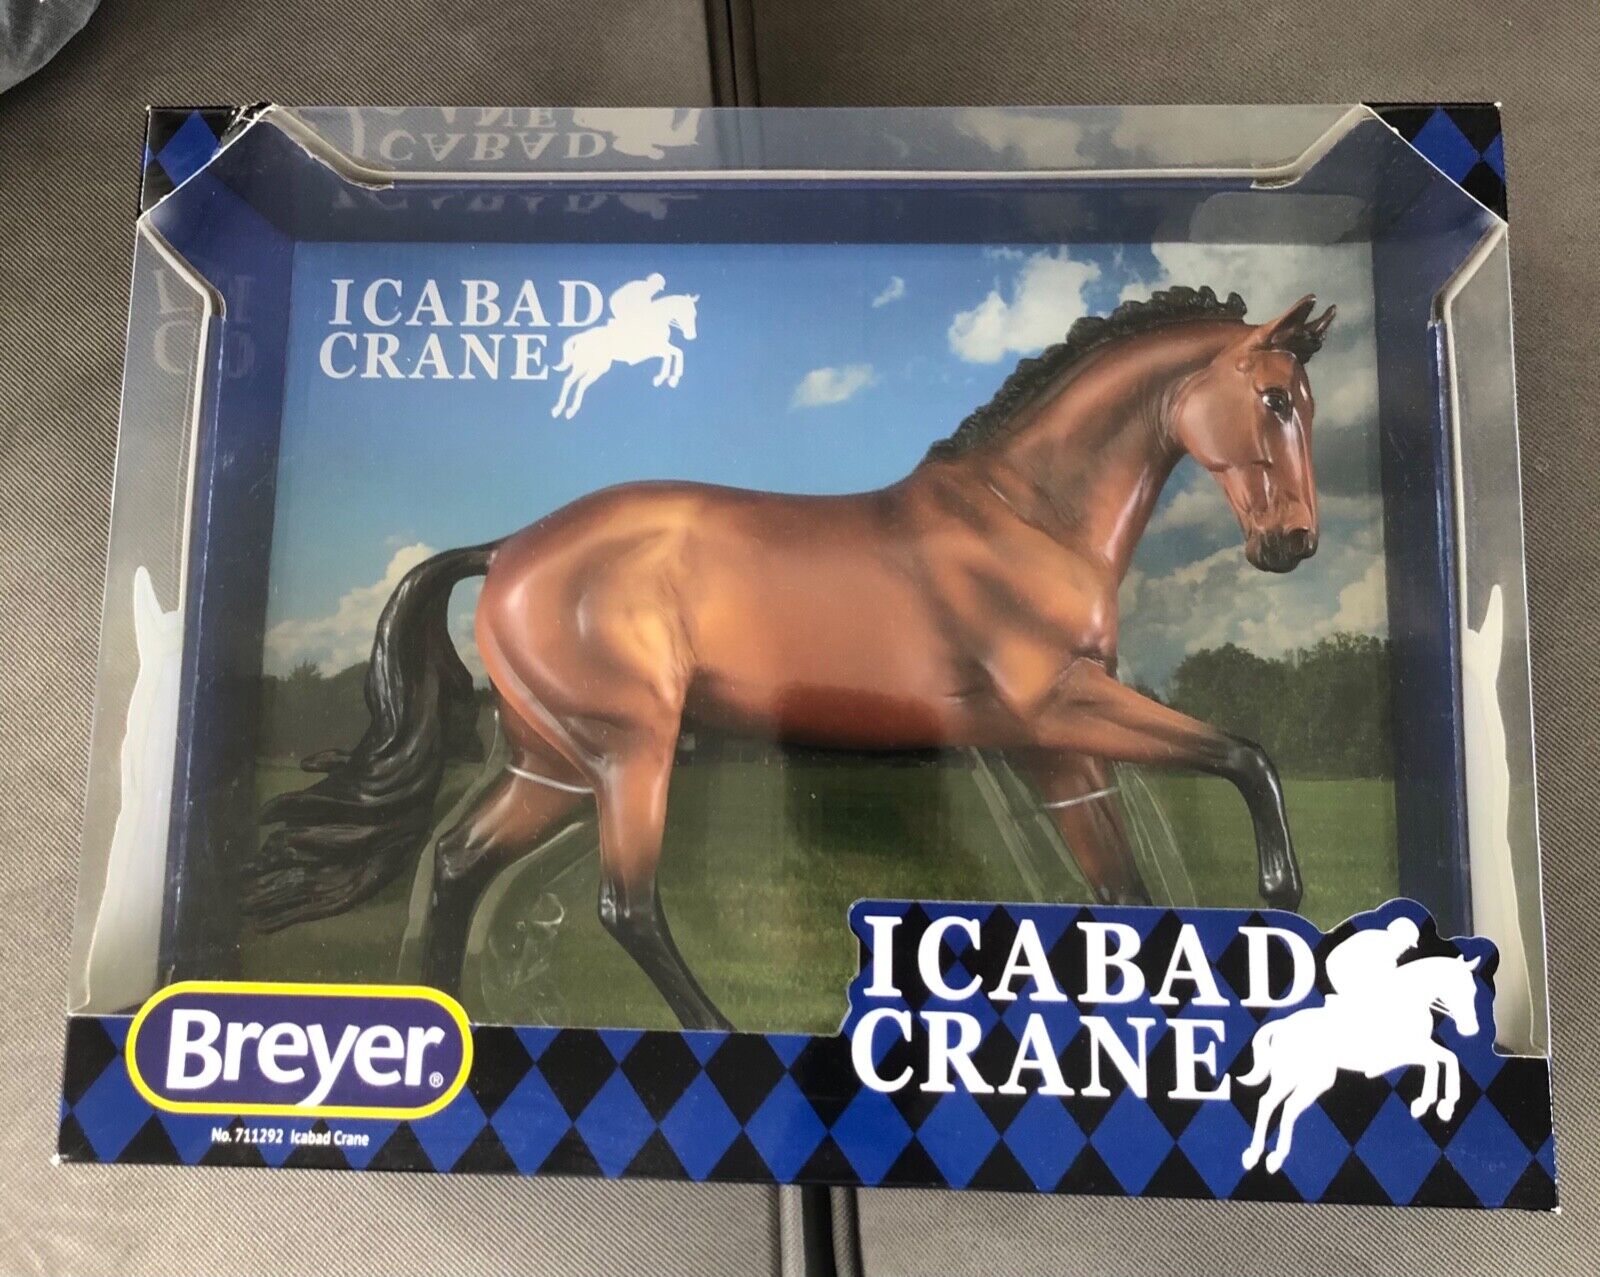 Breyerfest Breyer Horse, ICABAD CRANE, 2018 Store Special, New In-Box